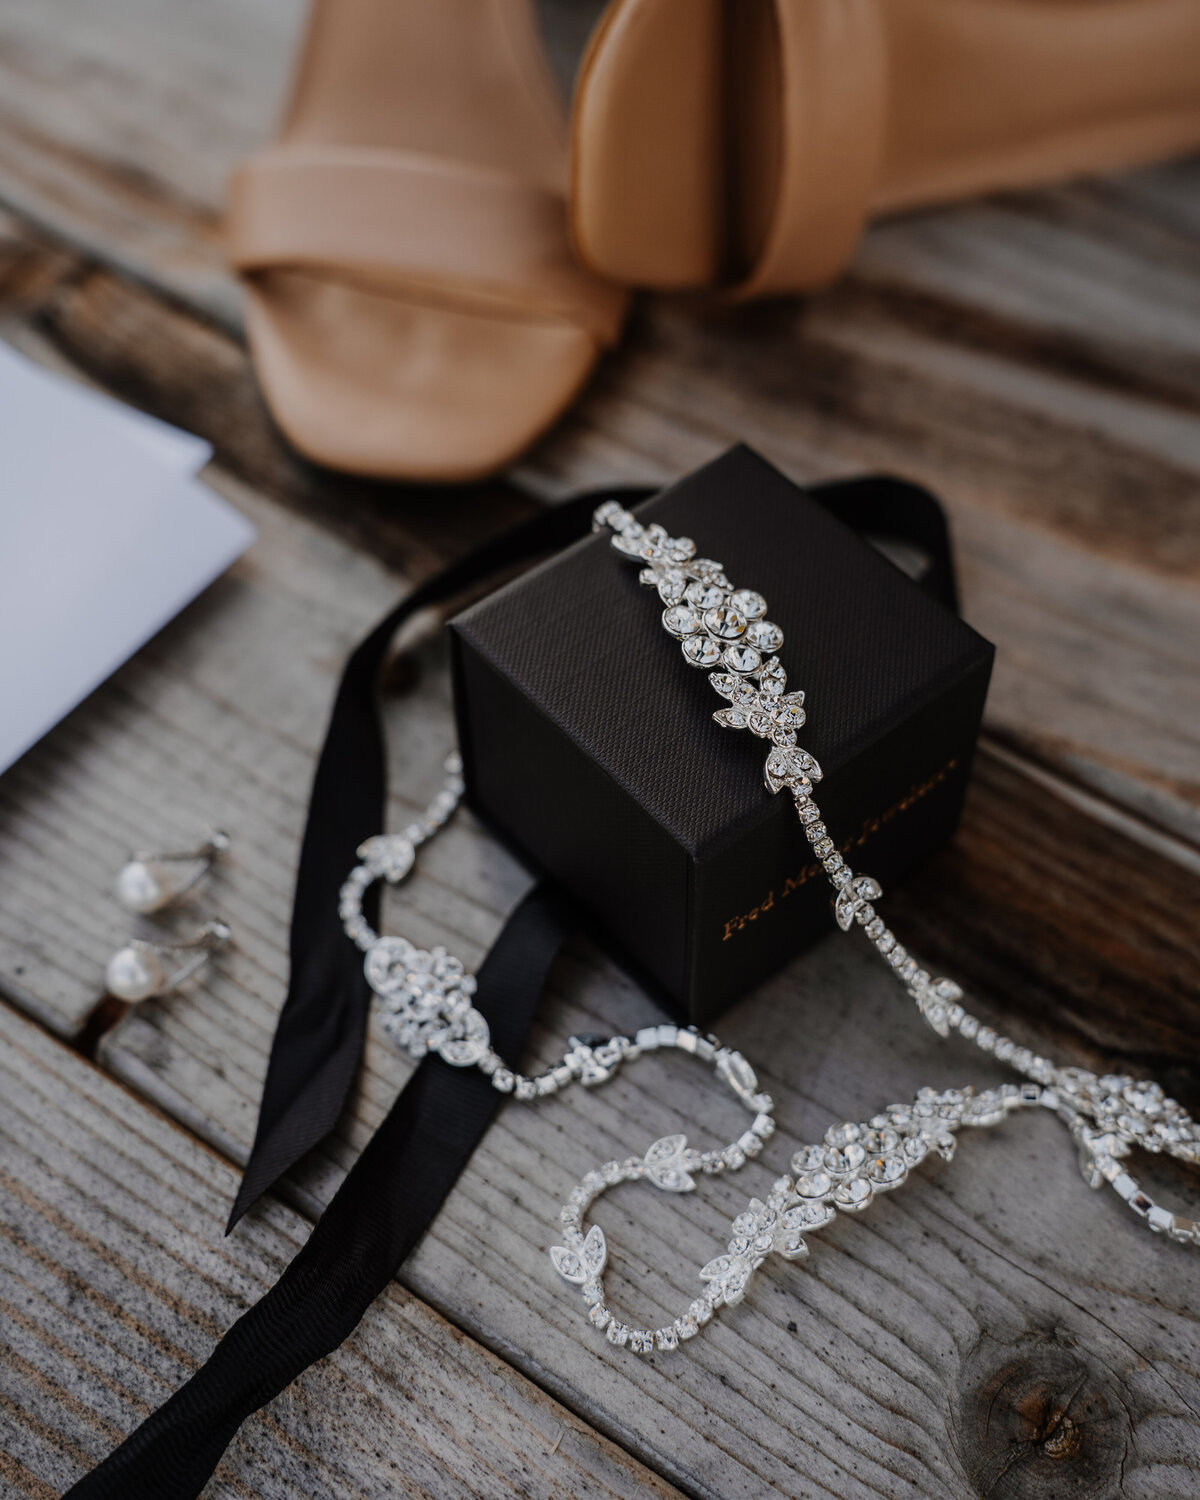 diamond necklace on black ring box next to women's heels